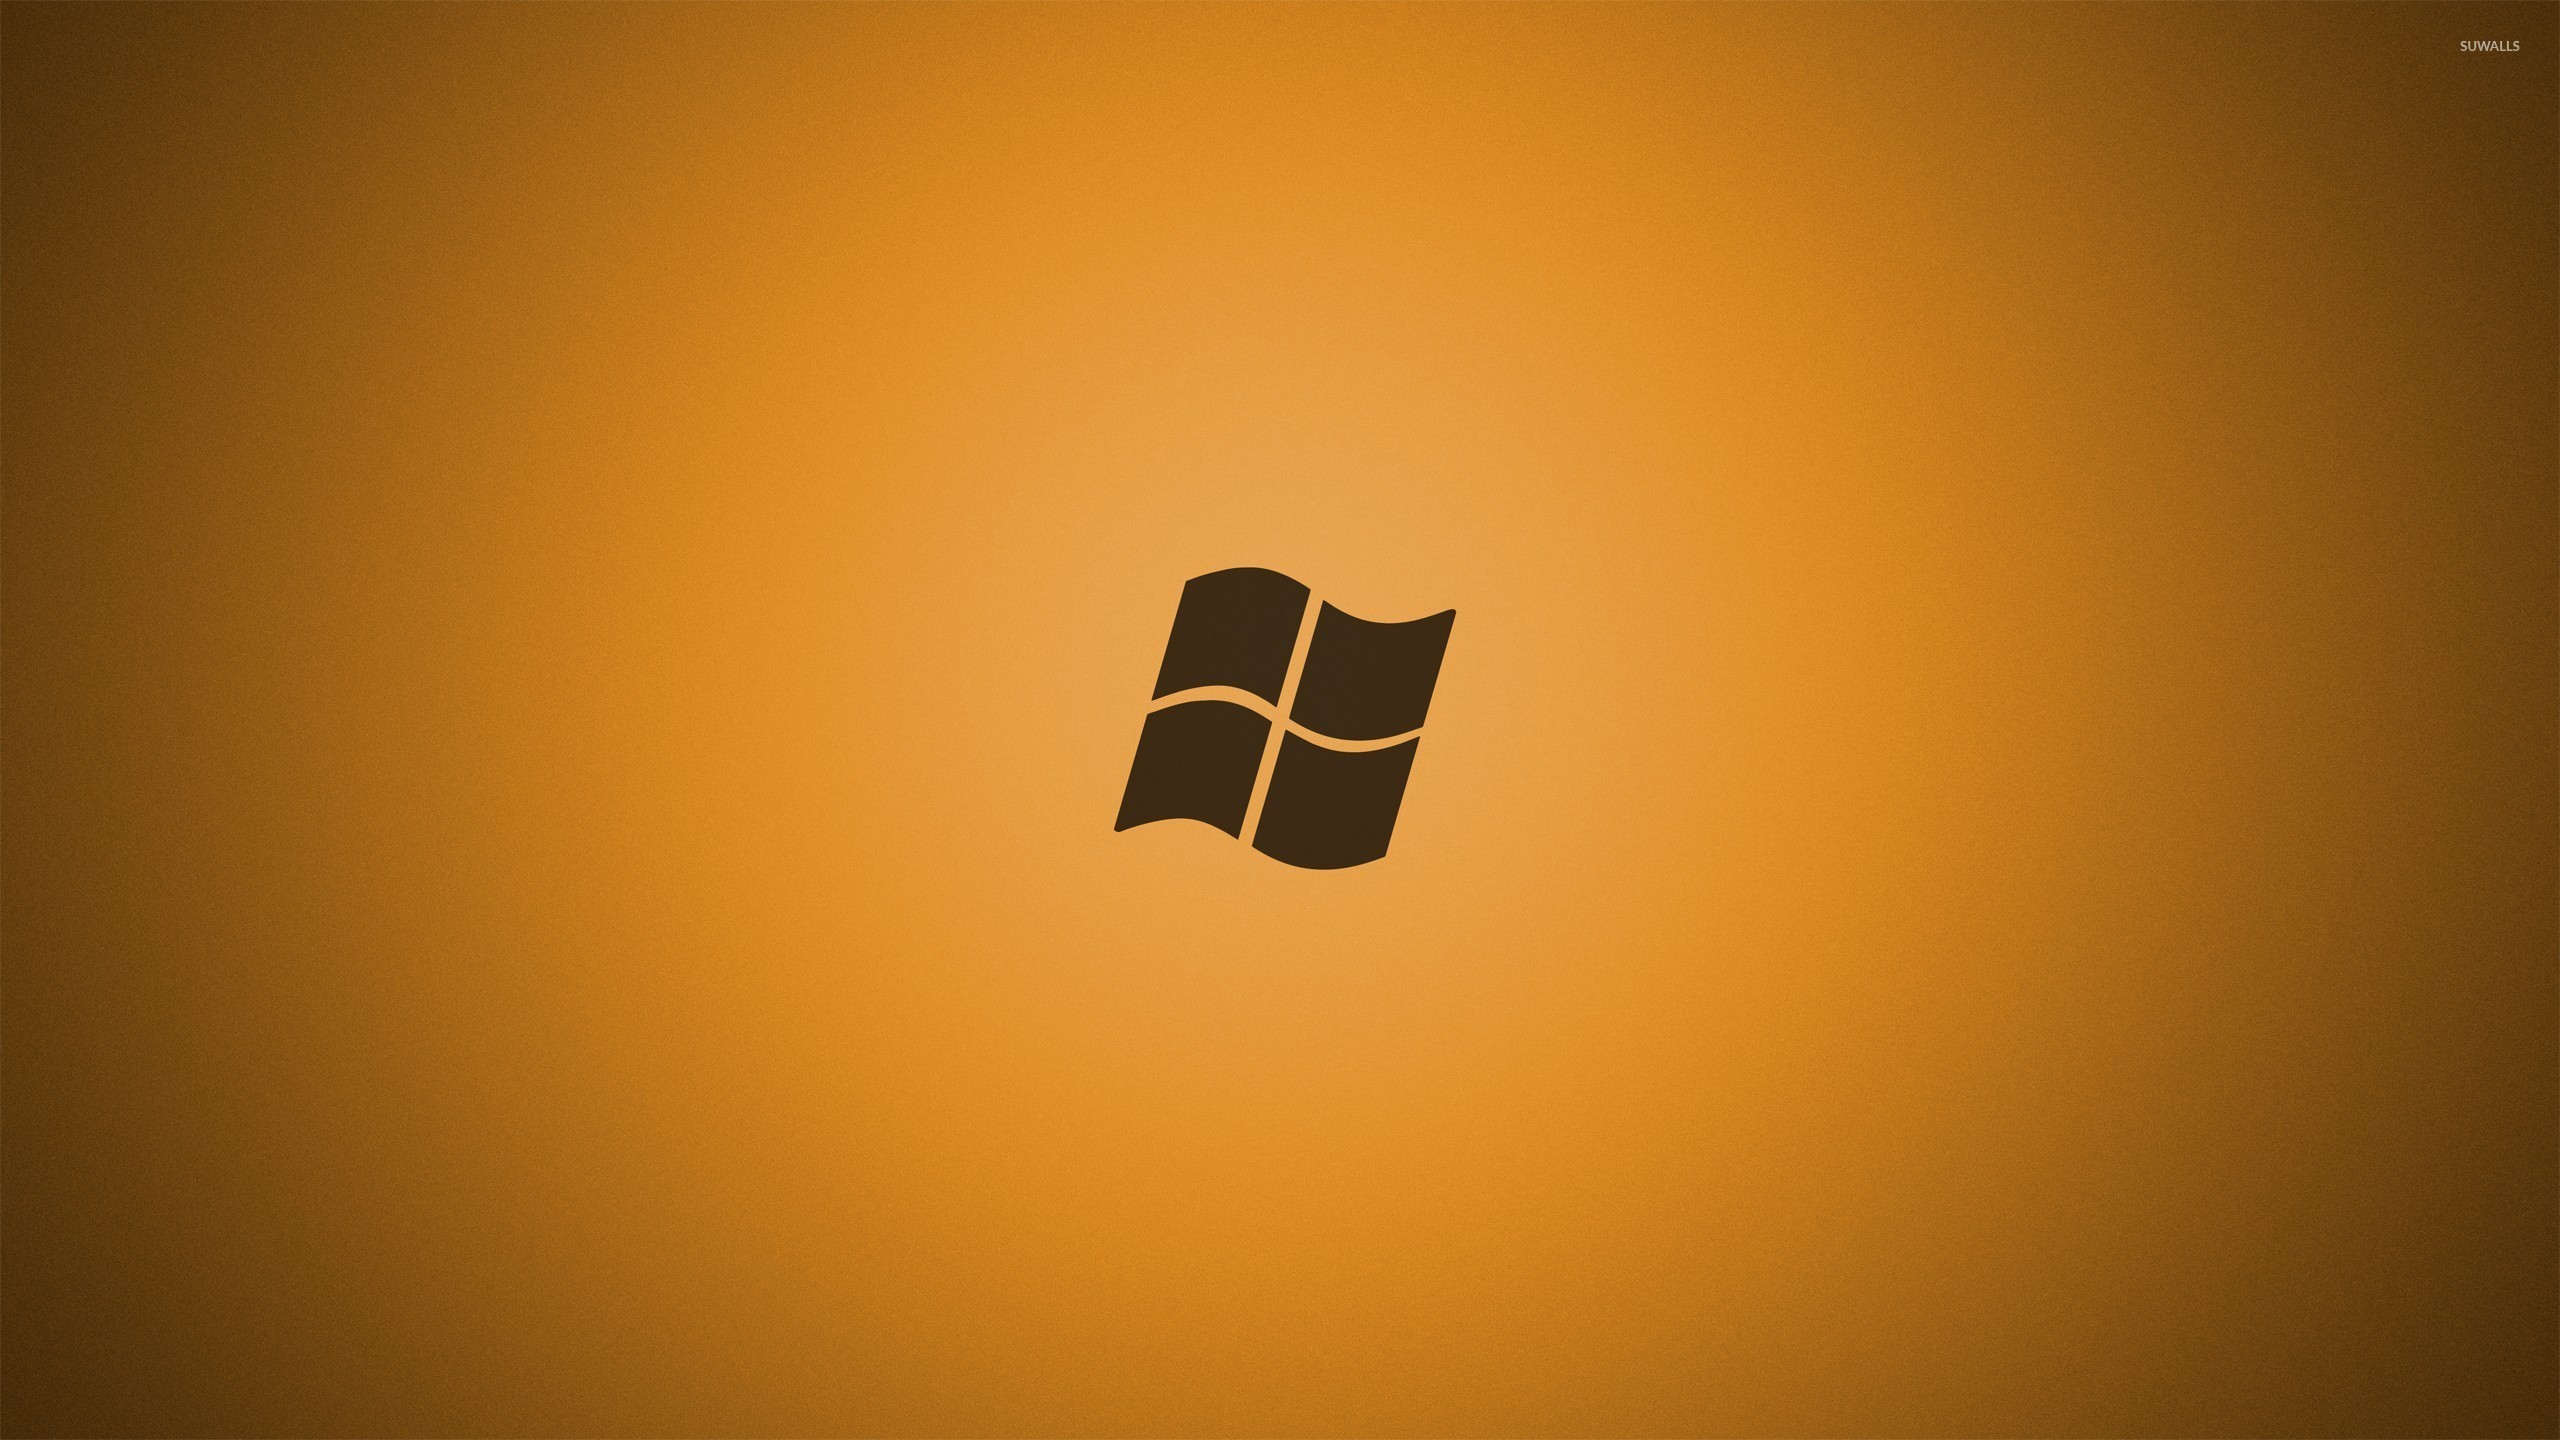 2560x1440 Windows 7 logo on golden background wallpaper